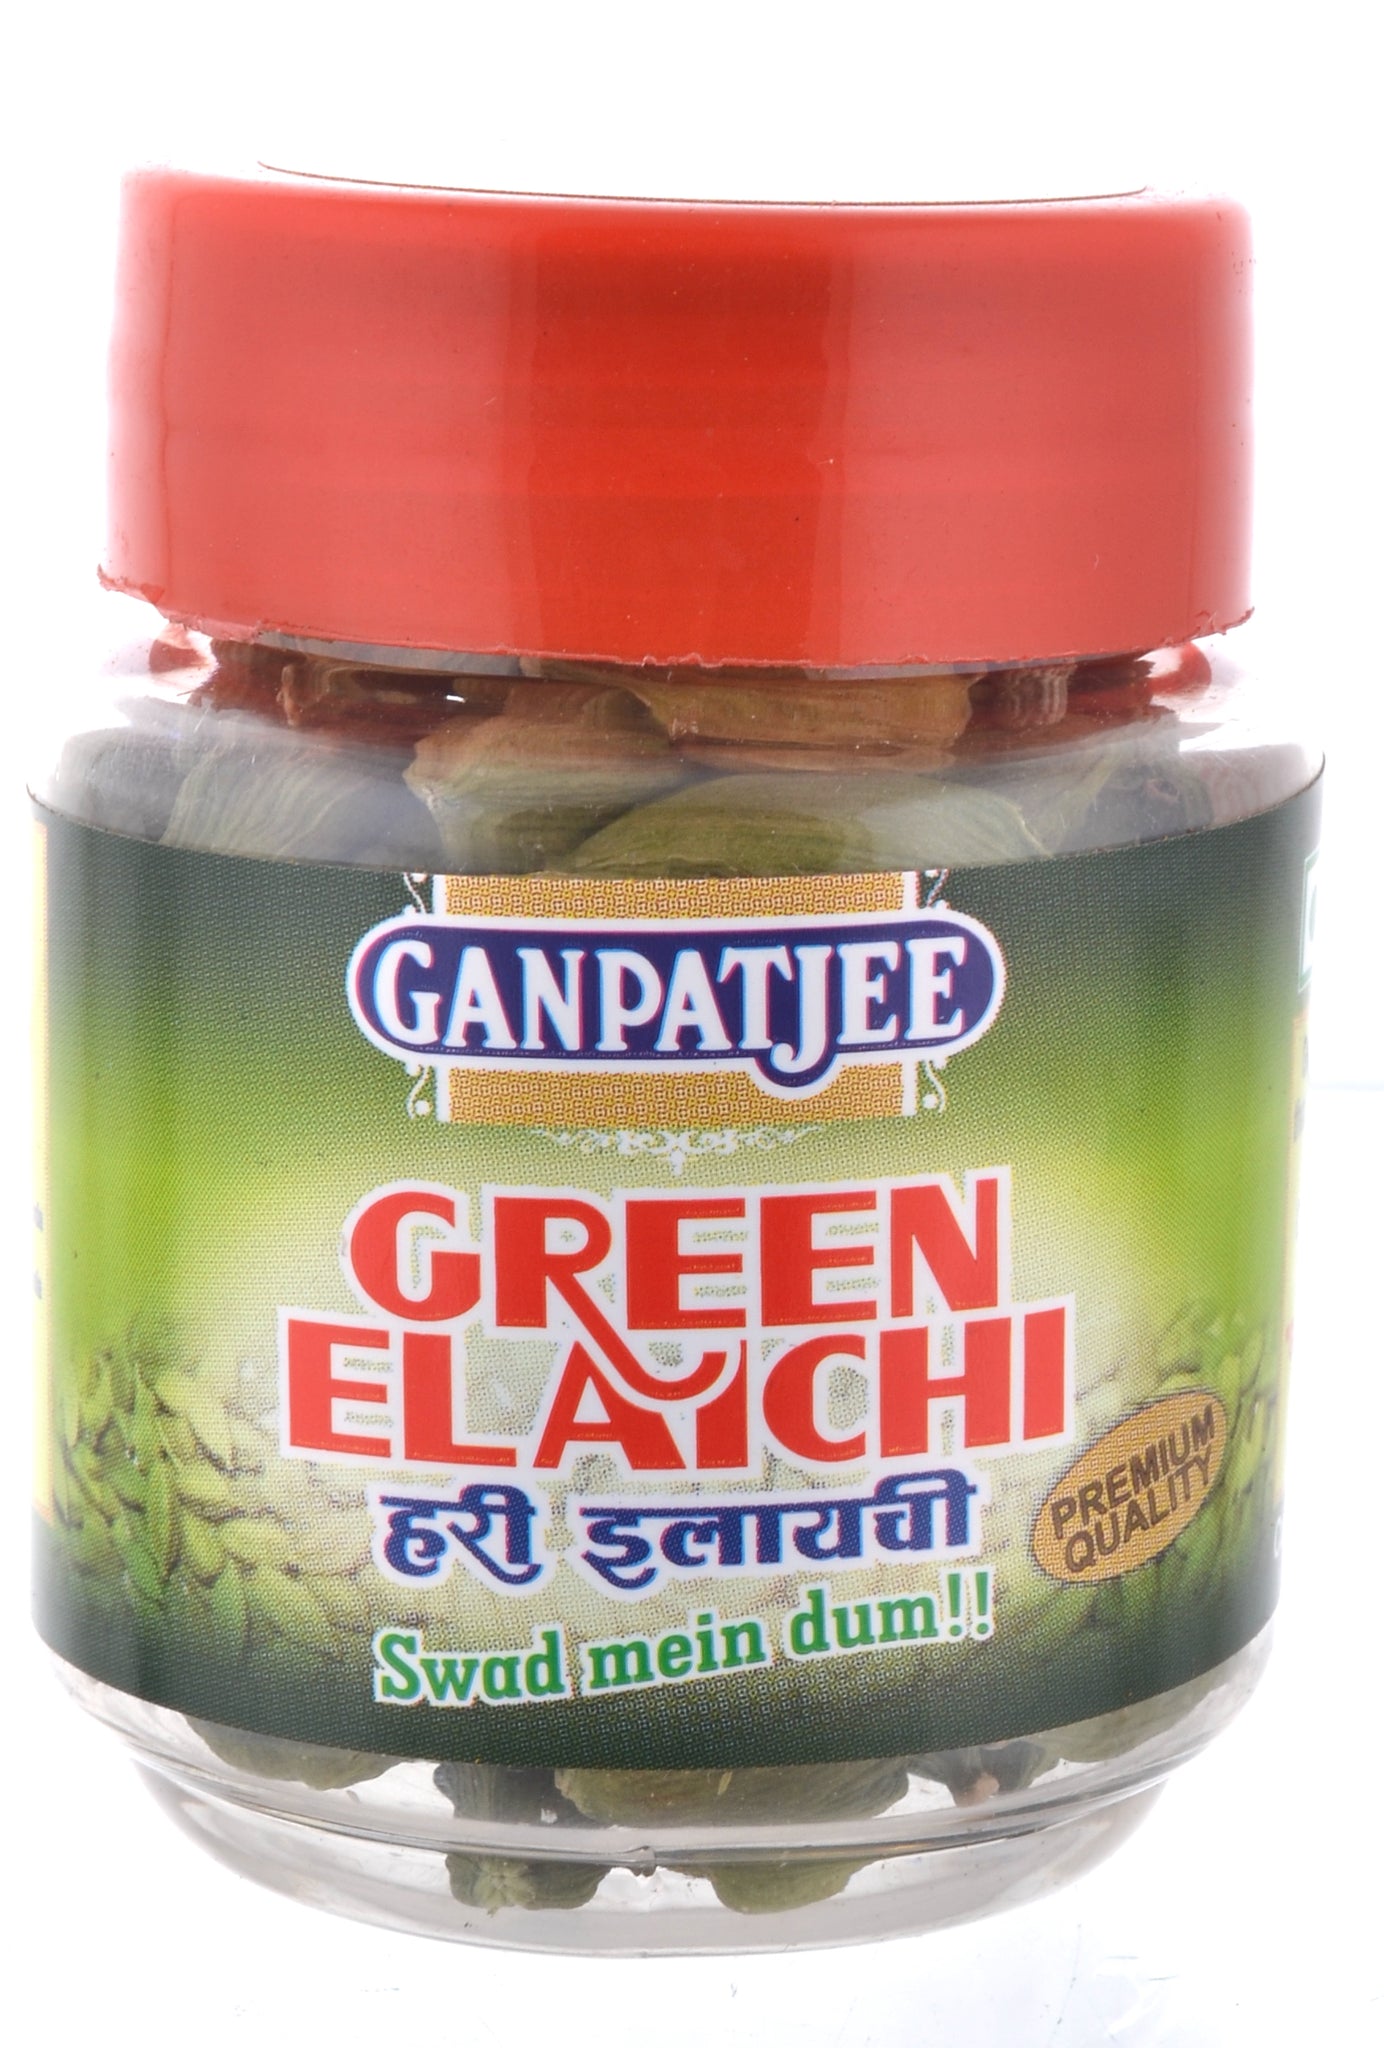 Ganpatjee Green Cardamom Elaichi, 25g